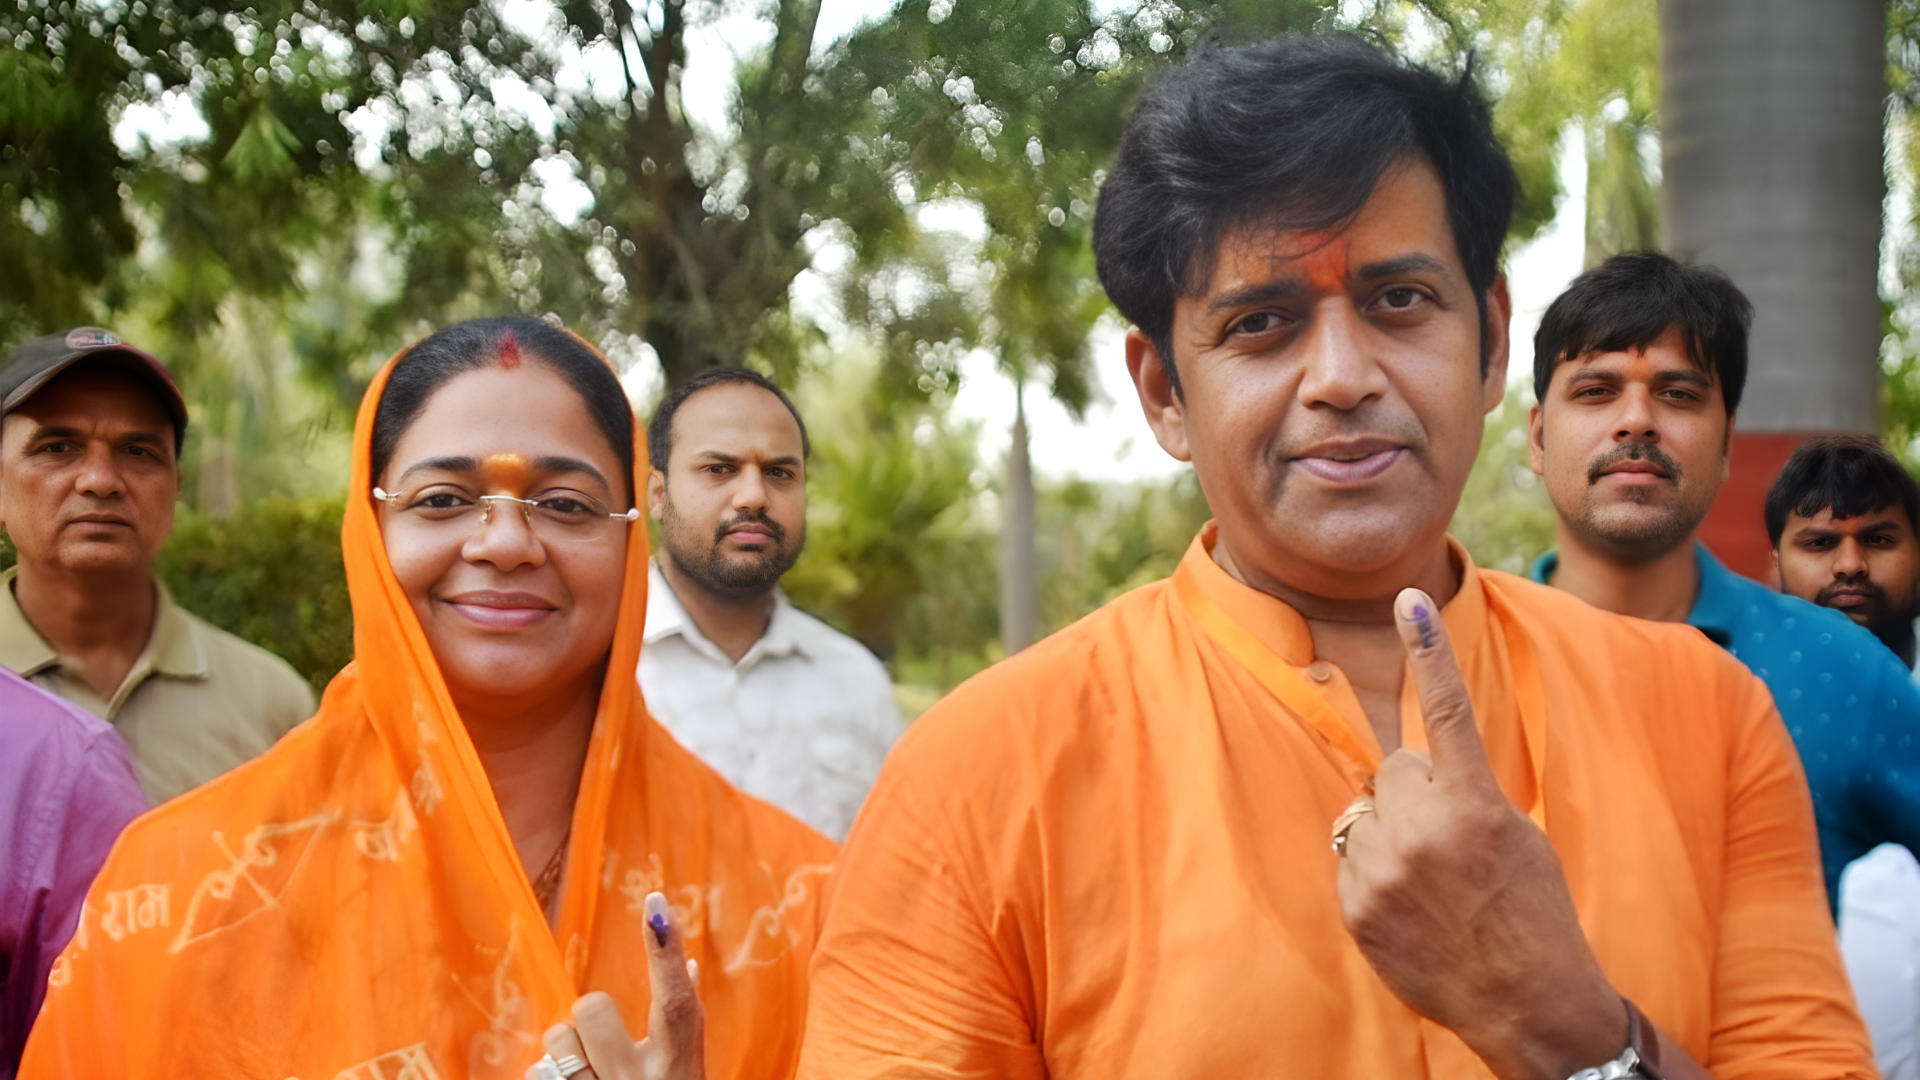 Gorakhpur Lok Sabha Candidate Ravi Kishan Highlights End of VIP Culture as He Casts Vote